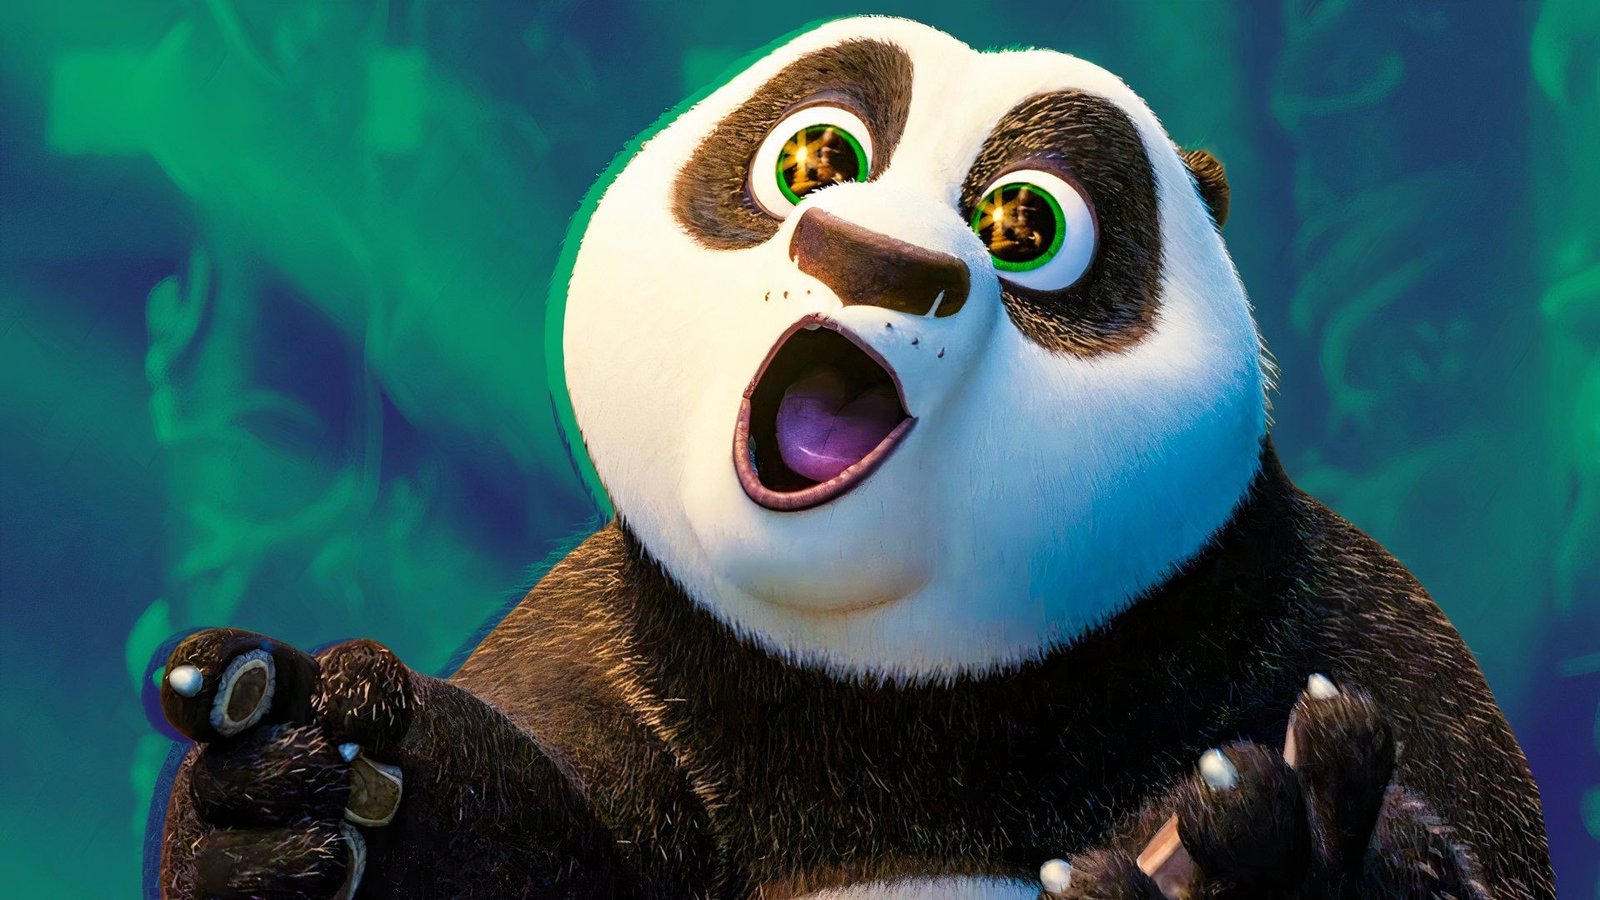 Kung Fu Panda 5 Will Be 'Bigger' According to 4th Film's Director